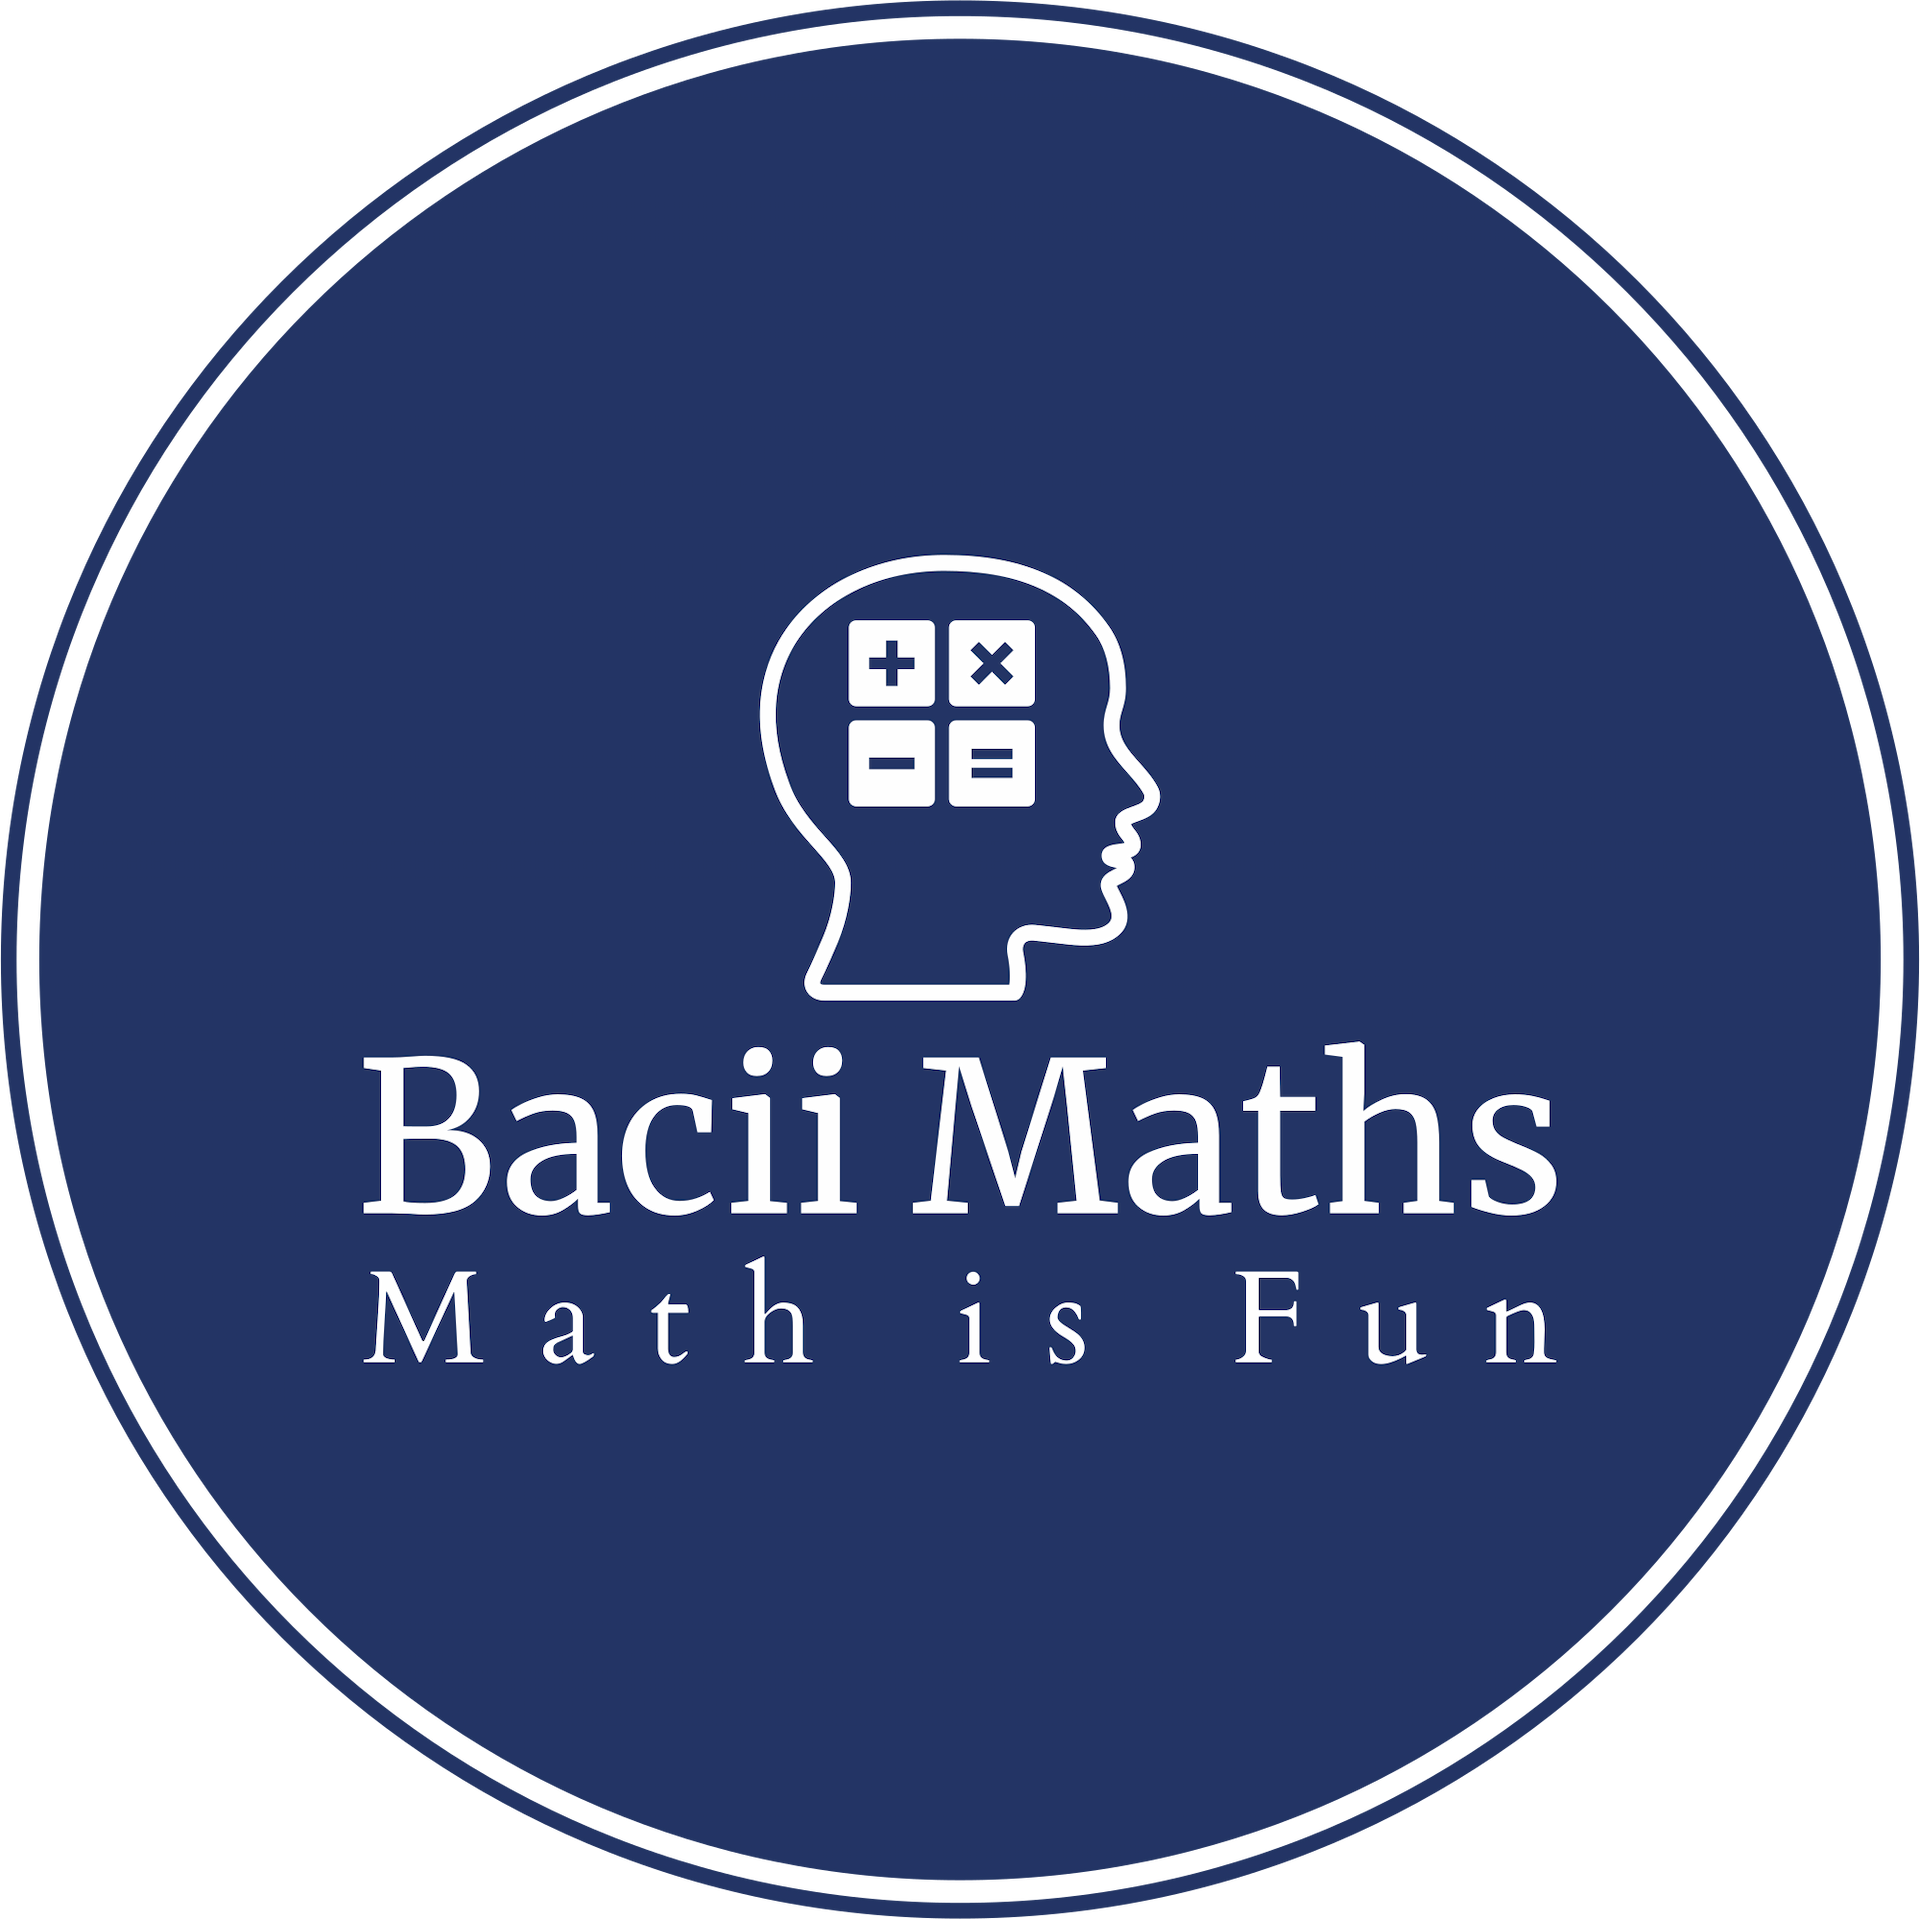 BacII Maths